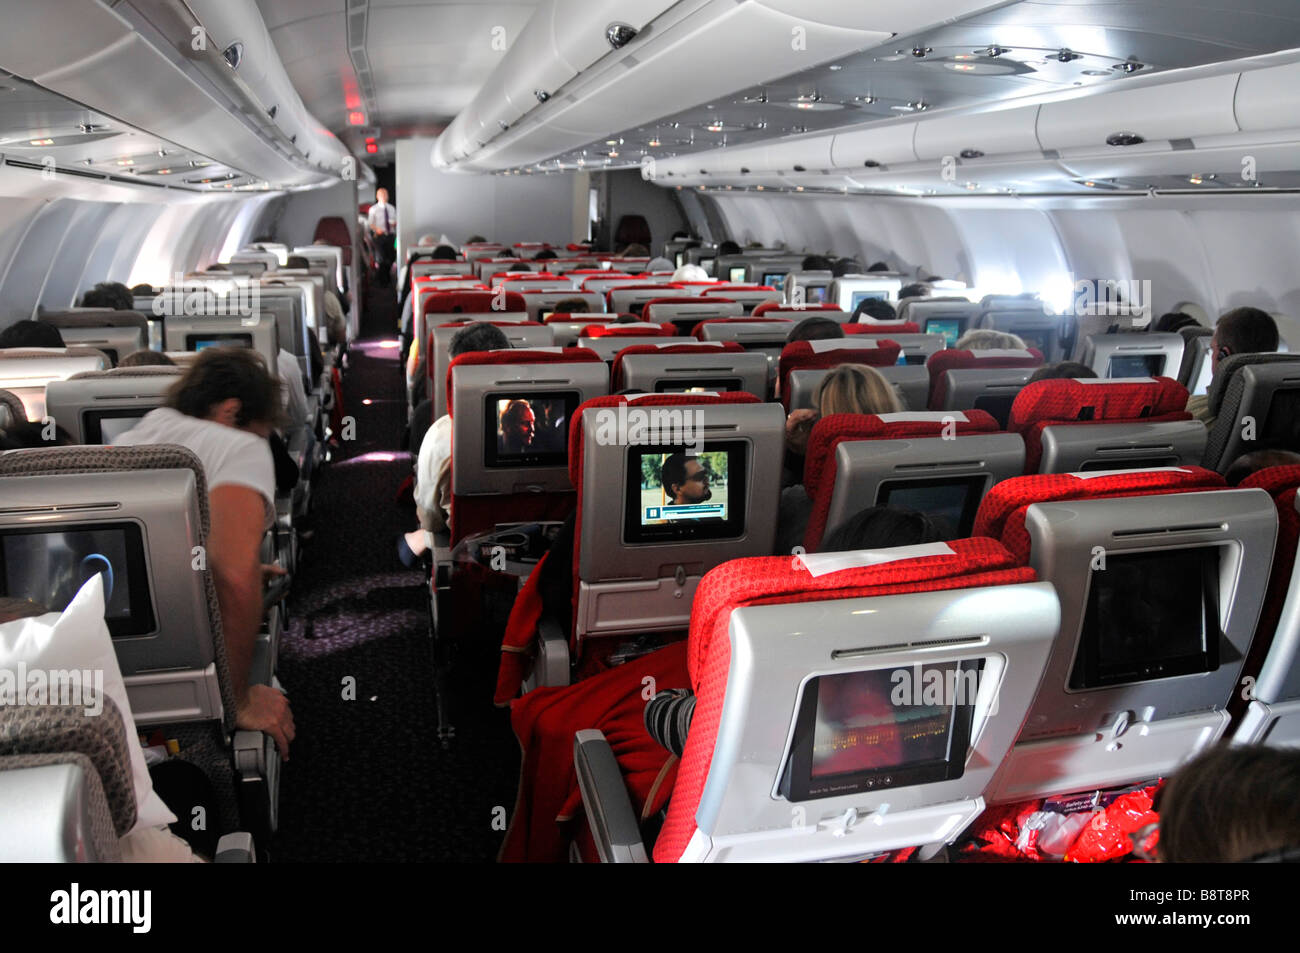 Virgin Atlantic Airbus jet airplane cabin passengers travel by passenger plane interiors inflight TV entertainment movie film screen on back of seats Stock Photo